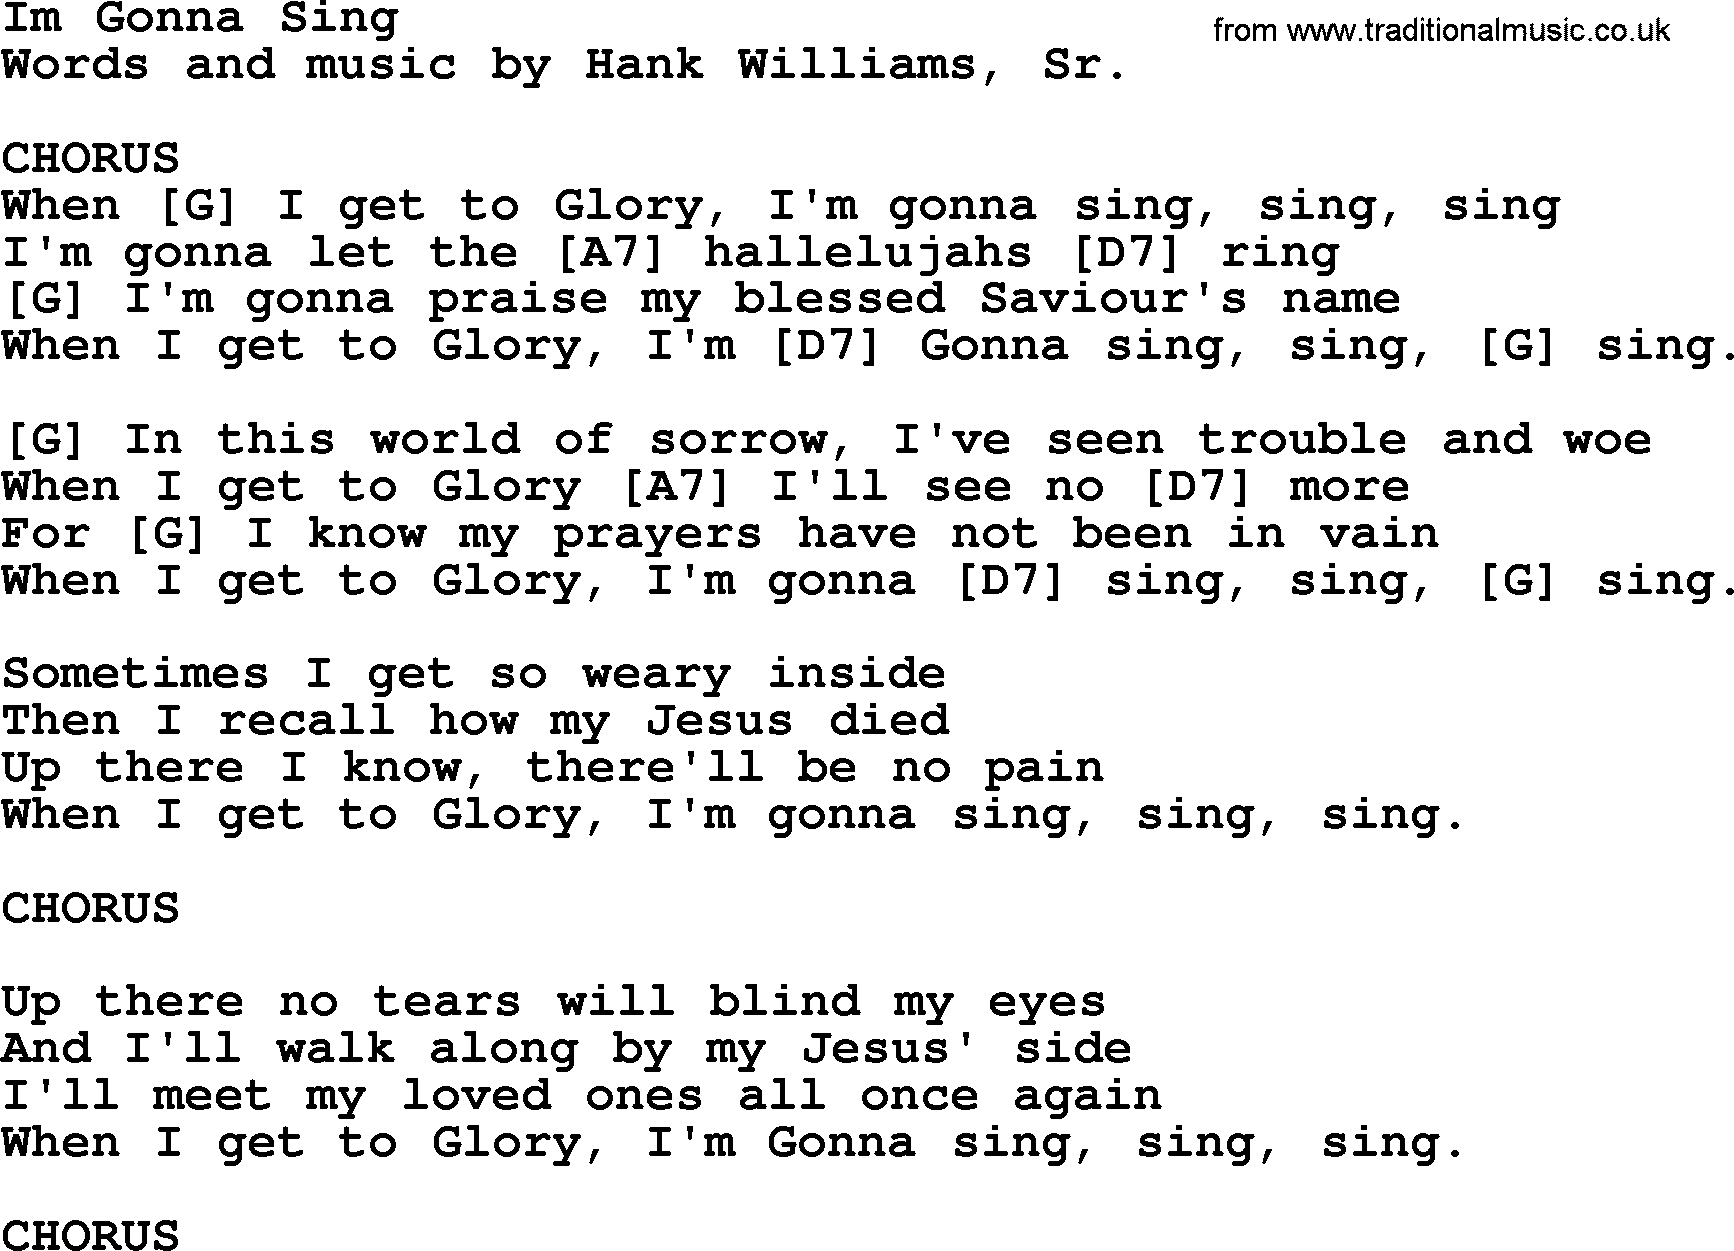 Hank Williams song Im Gonna Sing, lyrics and chords